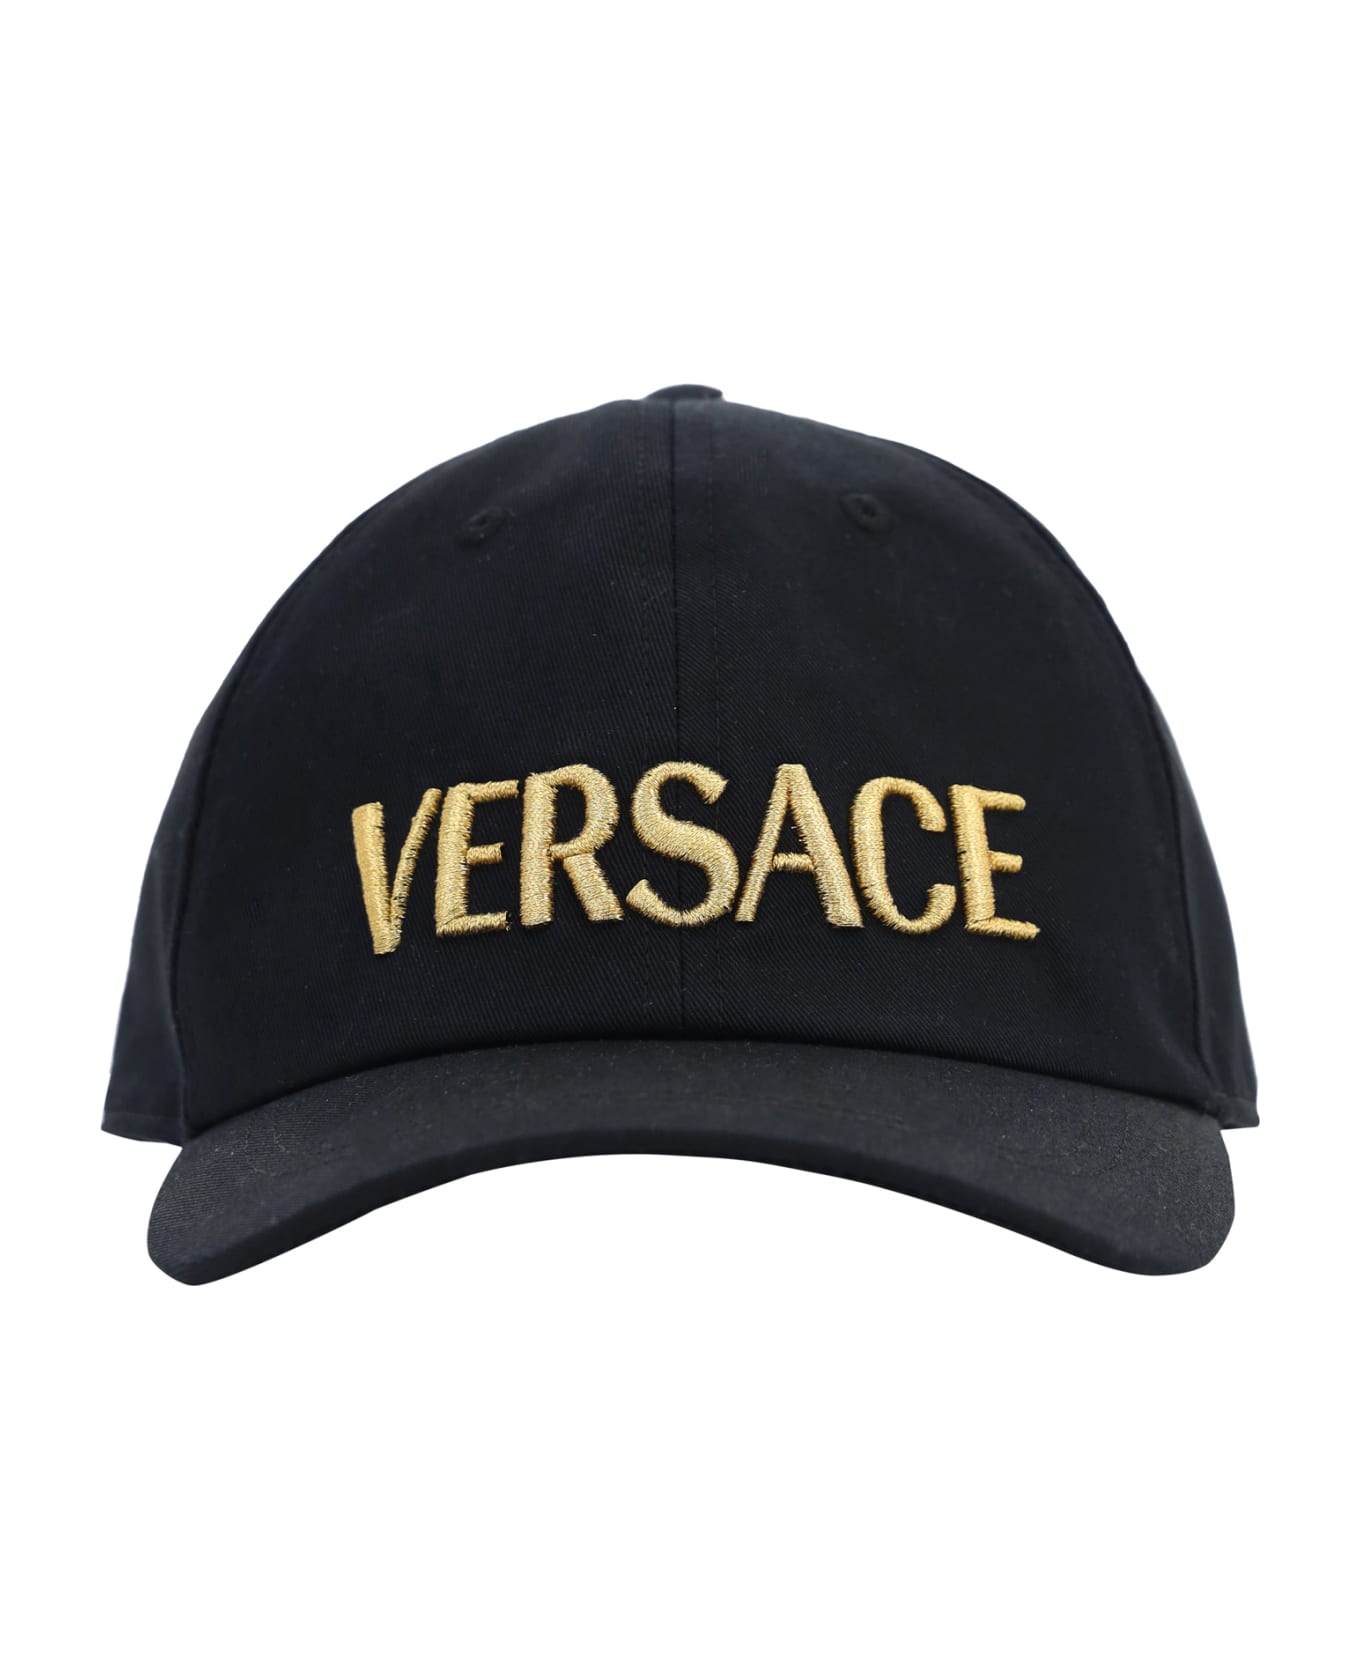 Versace Black Cotton Hat - Nero+oro